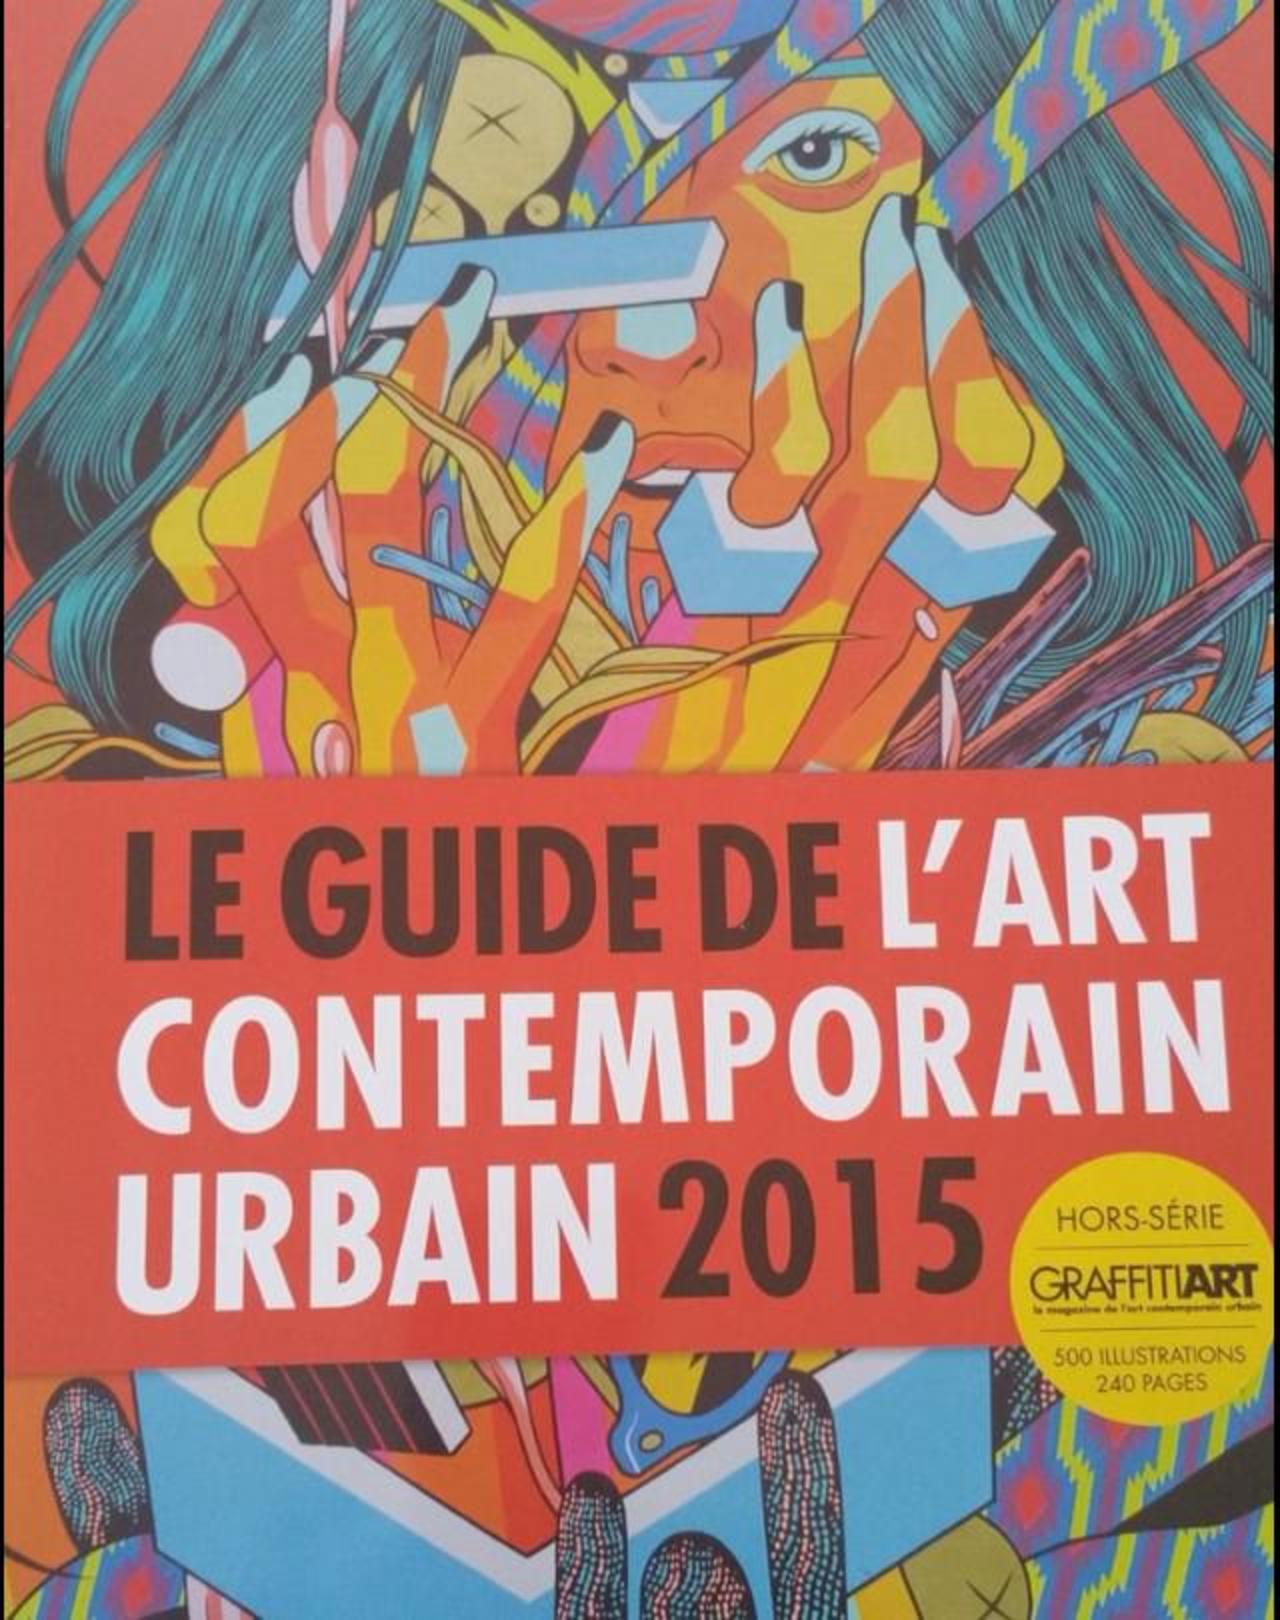 Le #guide de l'#art #contemporain #urbain 2015 ...
#streetart #graffiti http://t.co/uW9WMS5iDW